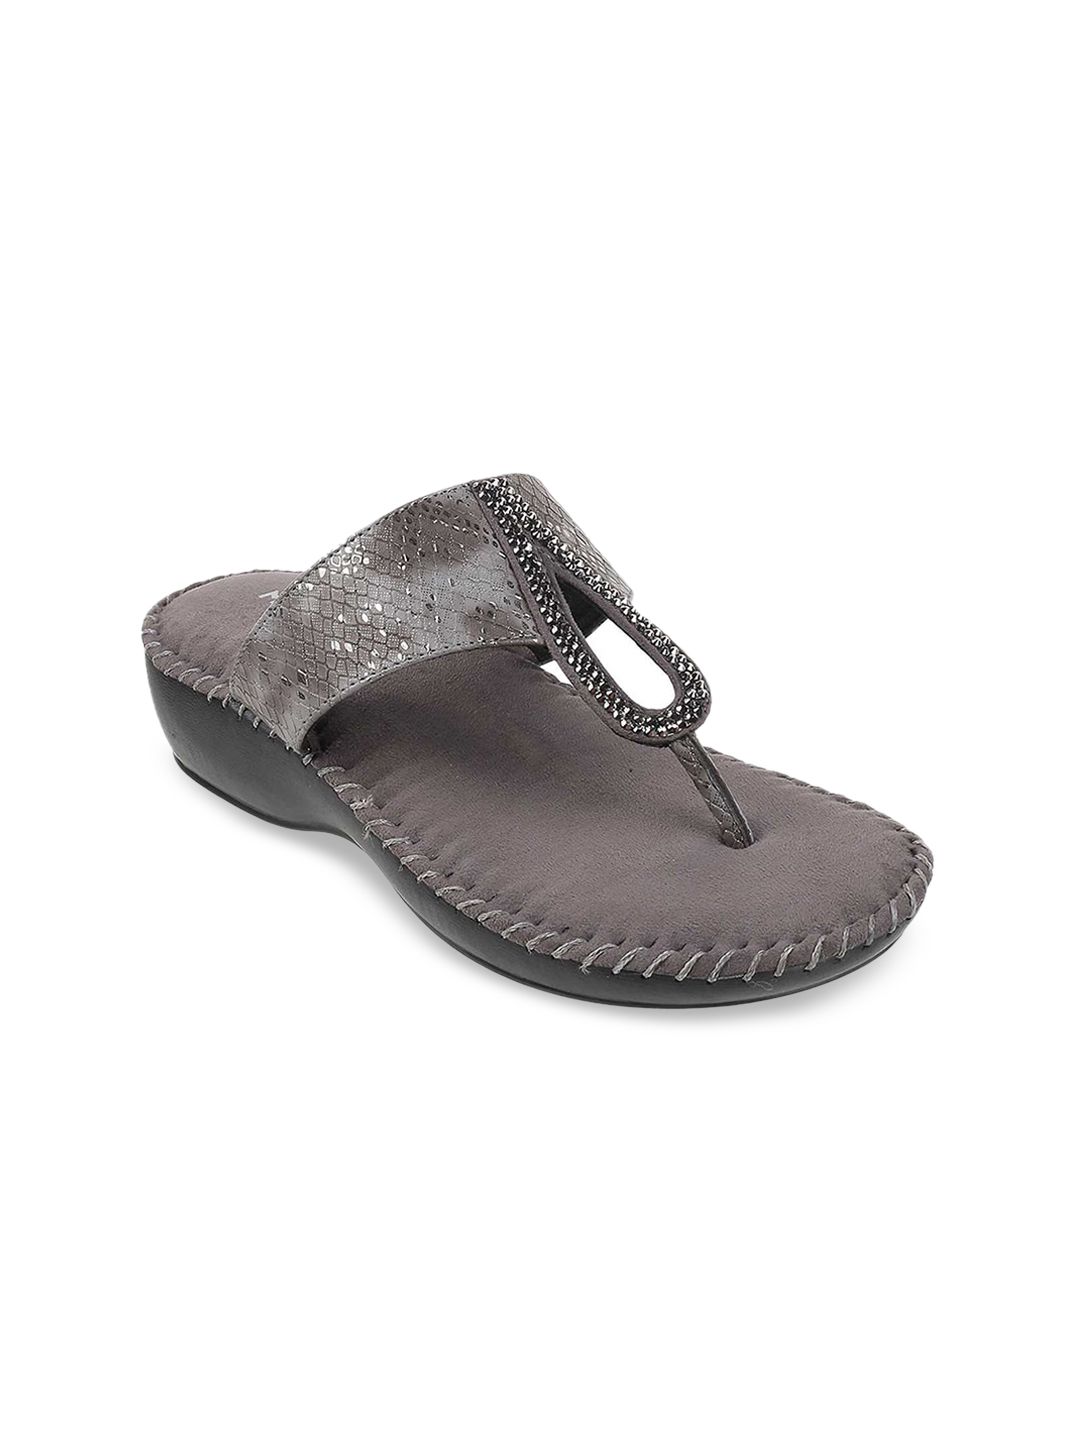 Mochi Grey Printed Comfort Sandals Price in India